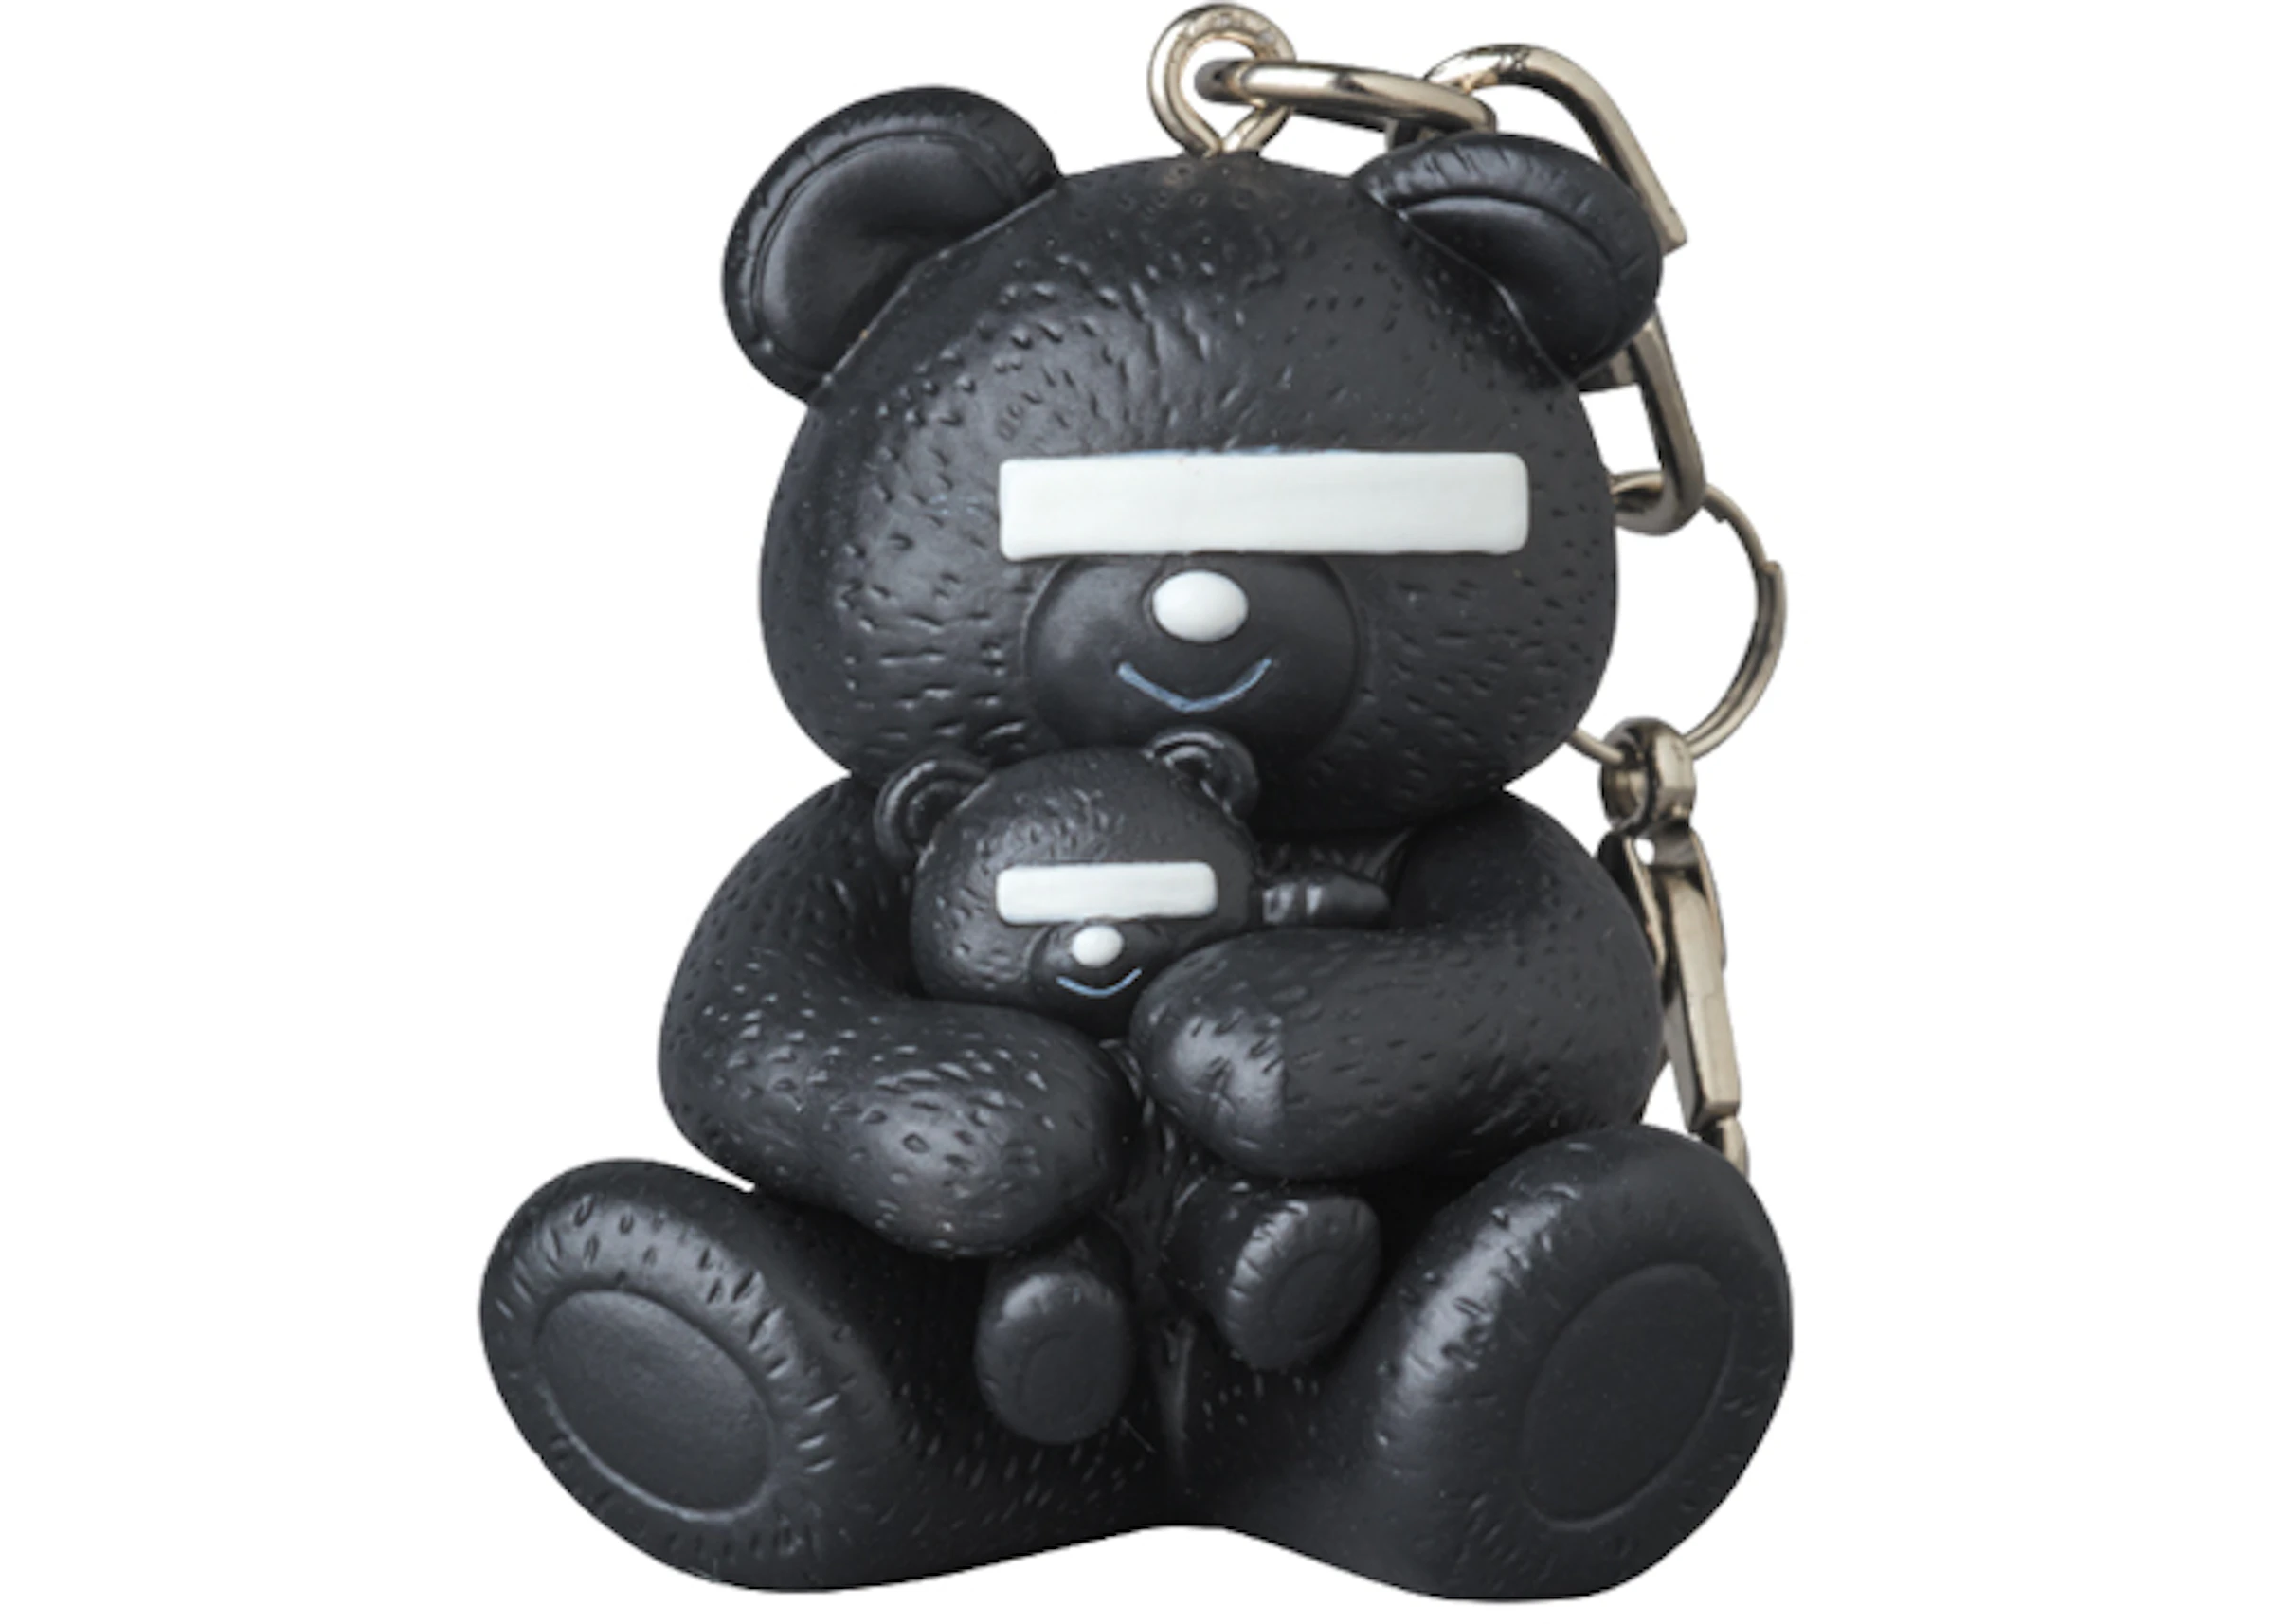 Undercover x Medicom Toy Bear Keychain Black - US